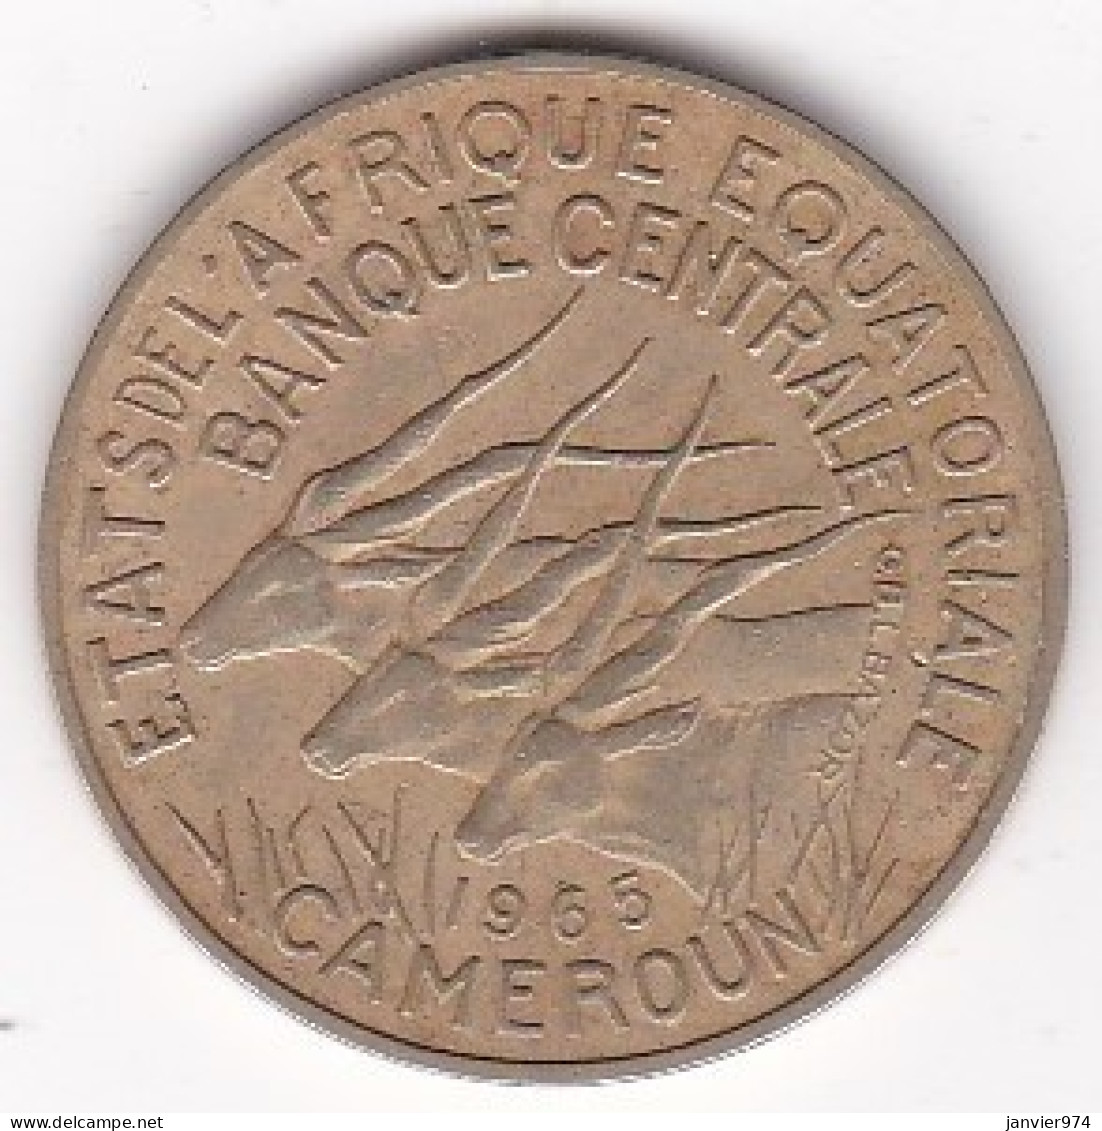 Cameroun, Afrique Equatoriale Française, 10 FRANCS 1965 Bronze Aluminium. KM# 2a - Cameroun